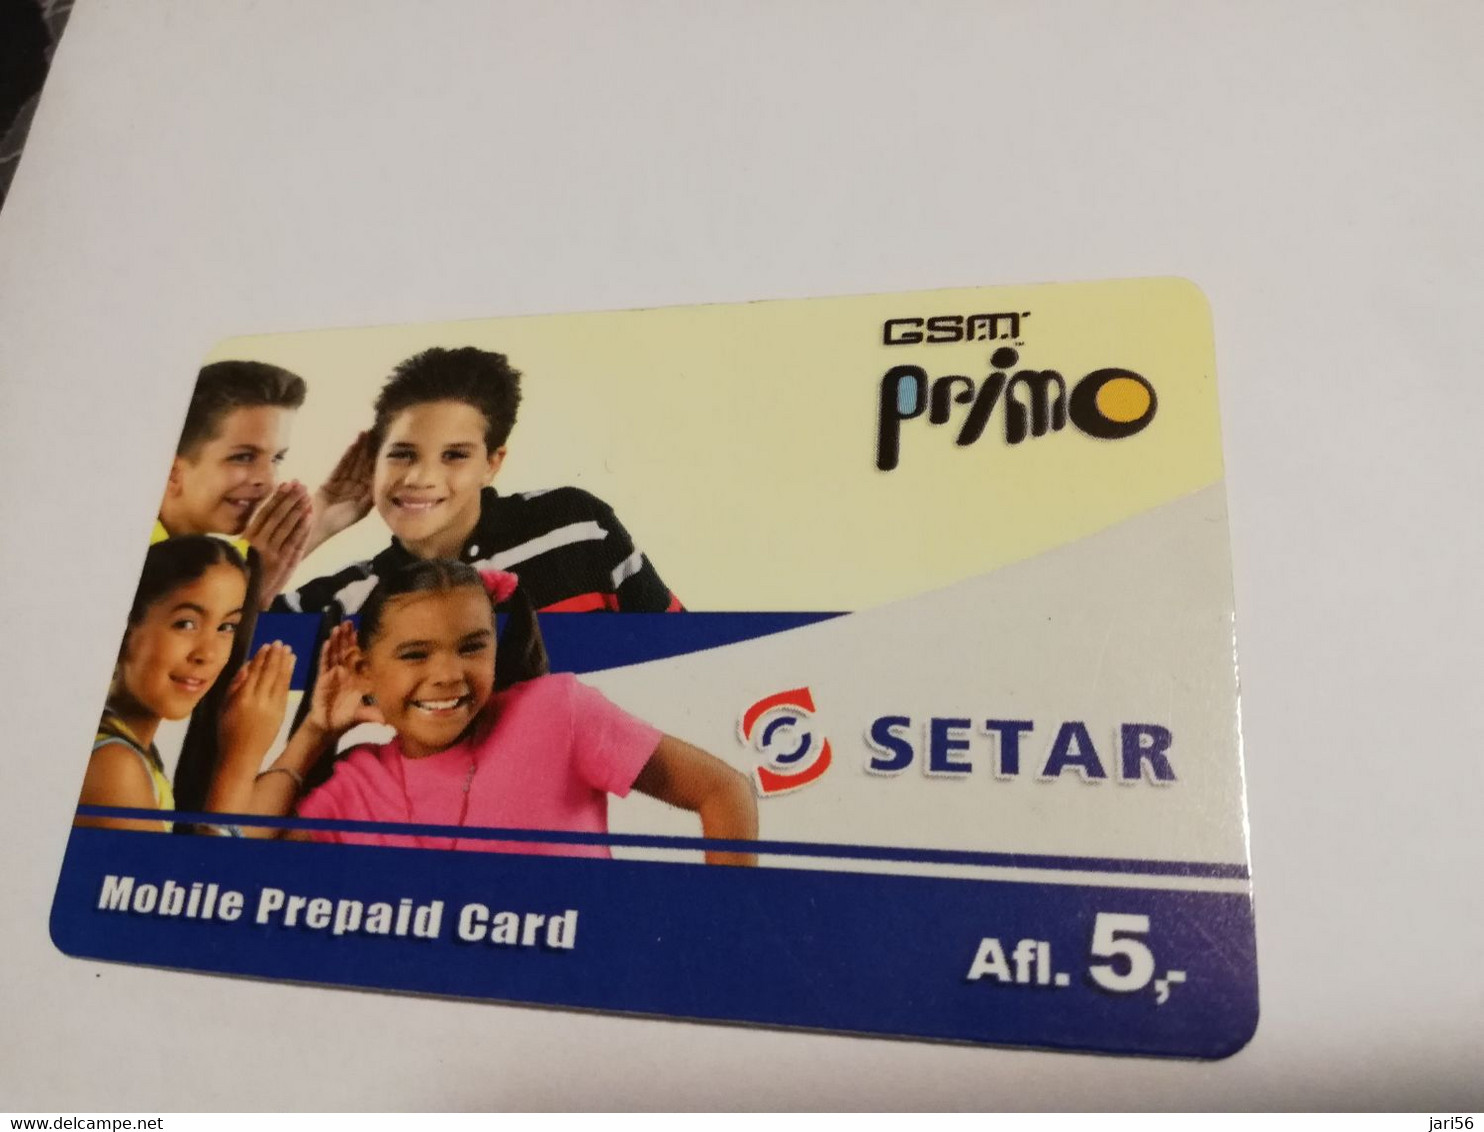 ARUBA PREPAID CARD  GSM PRIMO  SETAR   AFL 5,--    Fine Used Card  **4026** - Aruba